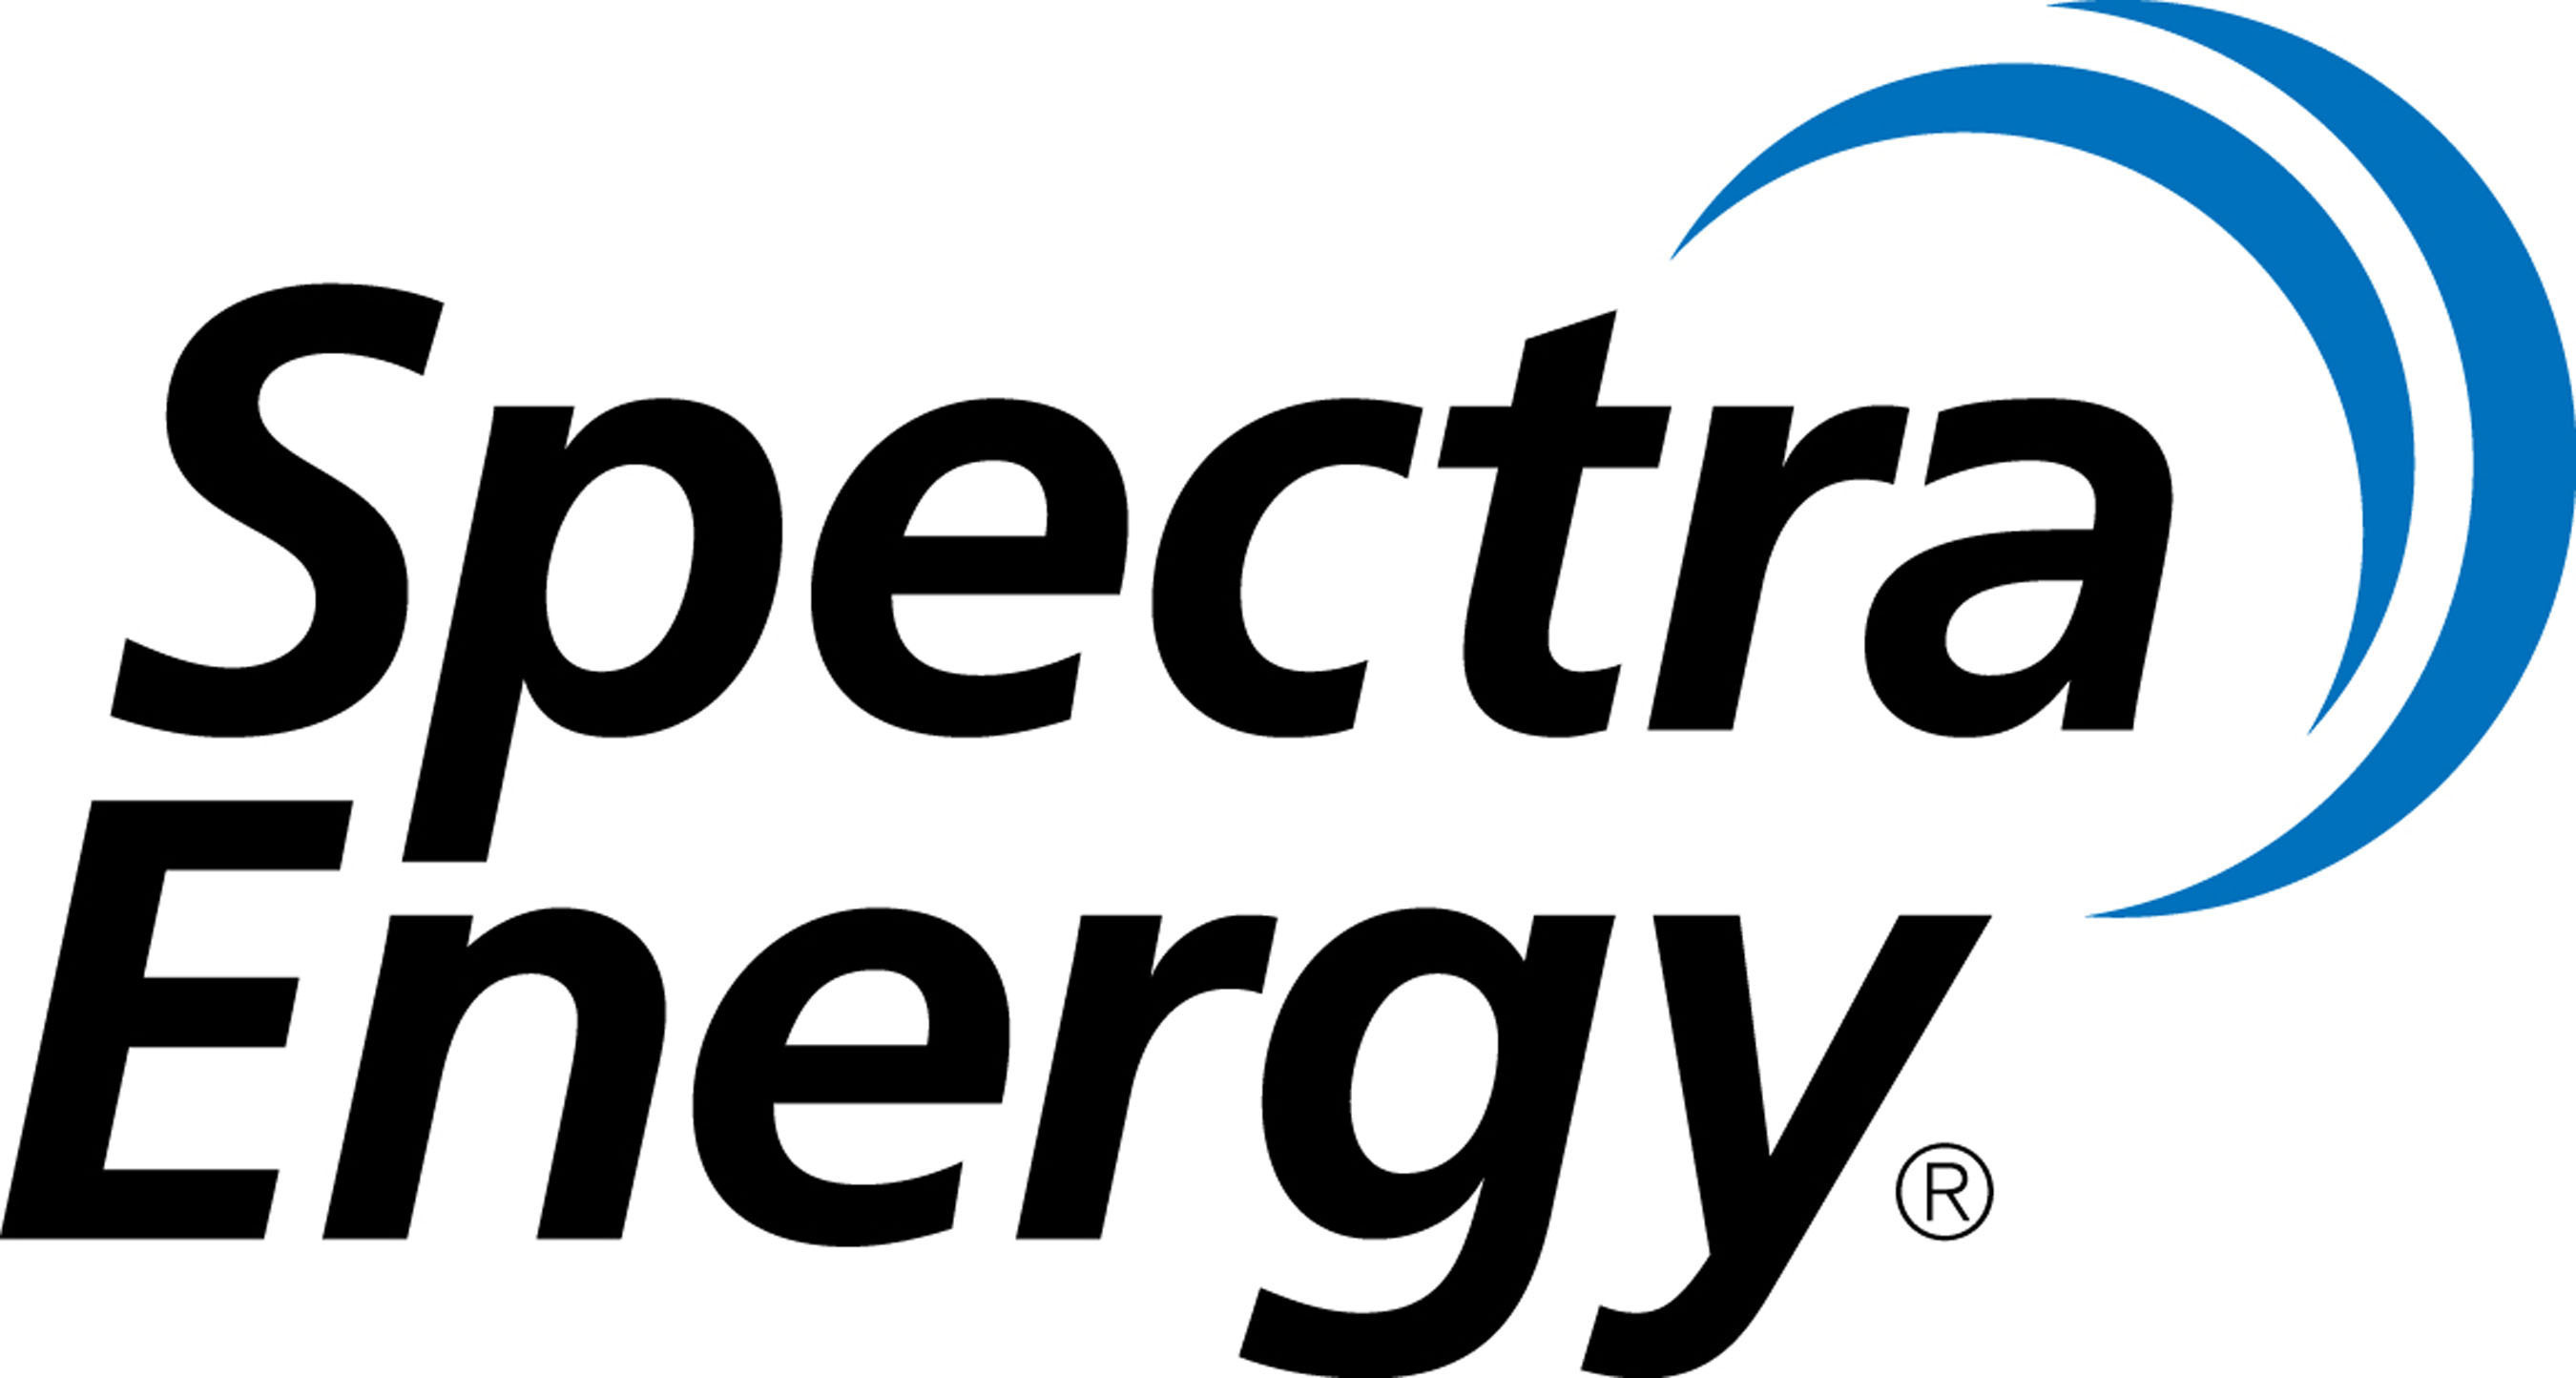 Spectra Energy Corp logo. (PRNewsFoto/Spectra Energy) (PRNewsFoto/)